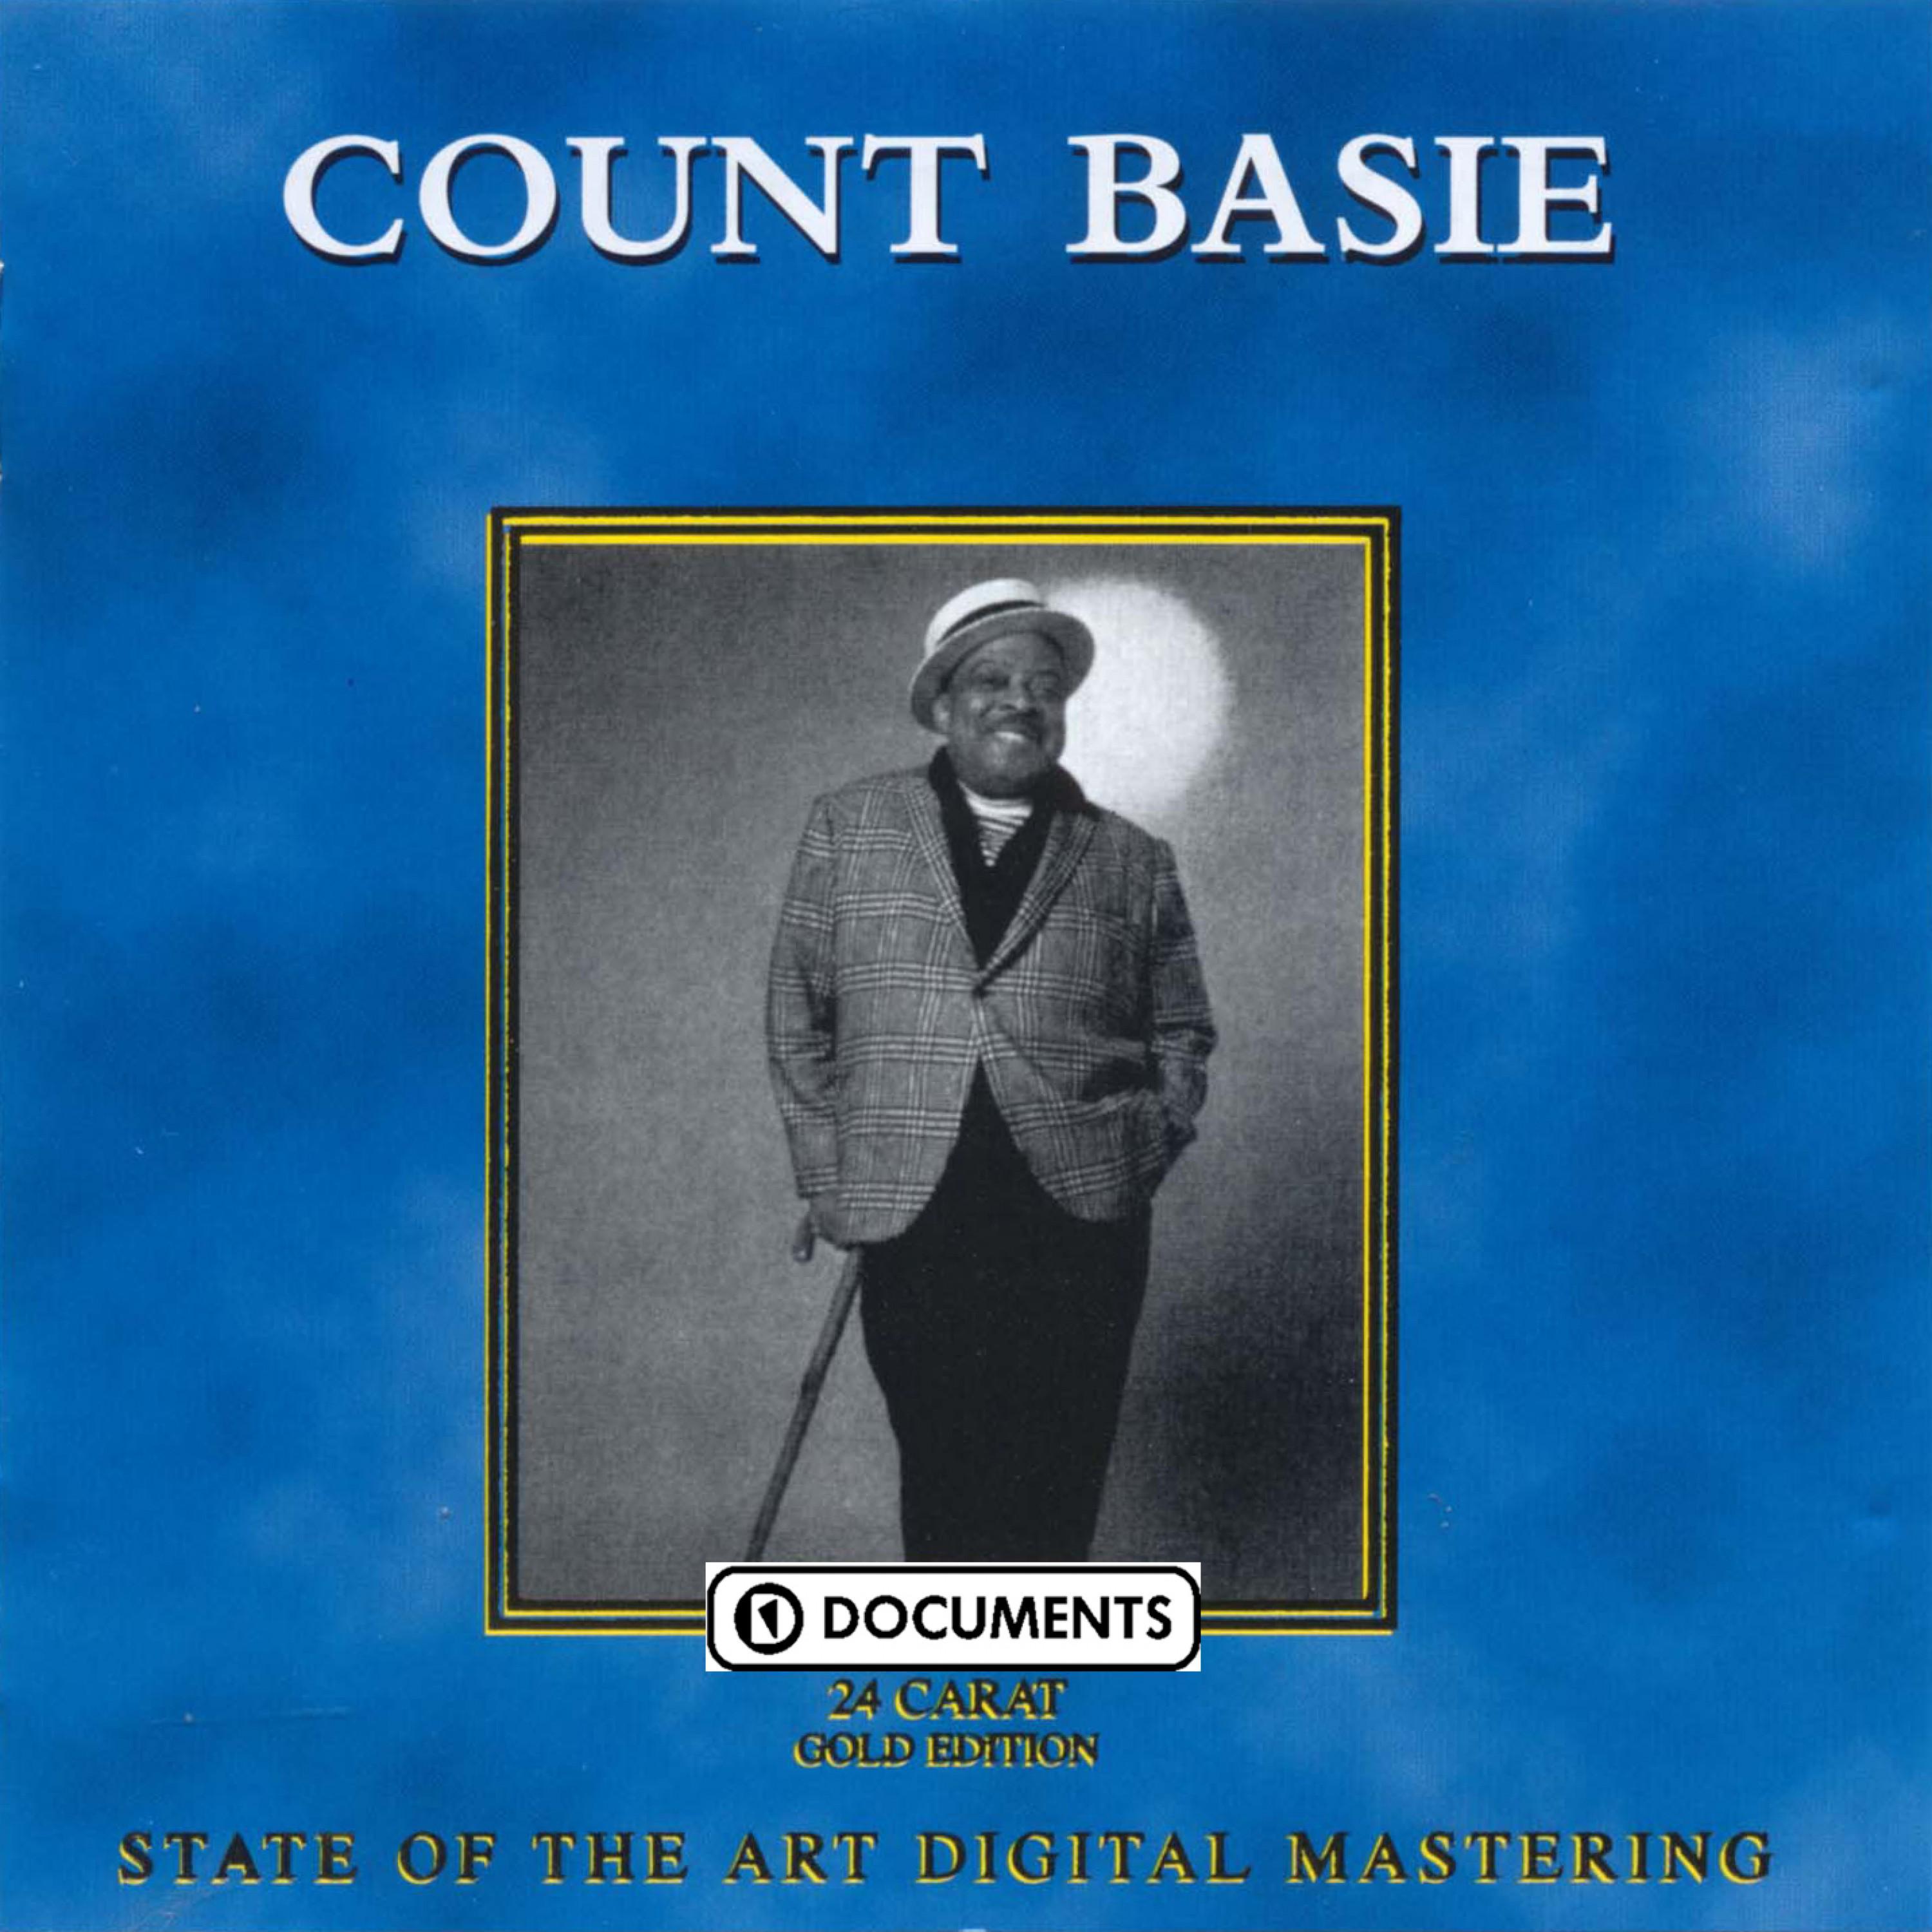 Basie s Basement